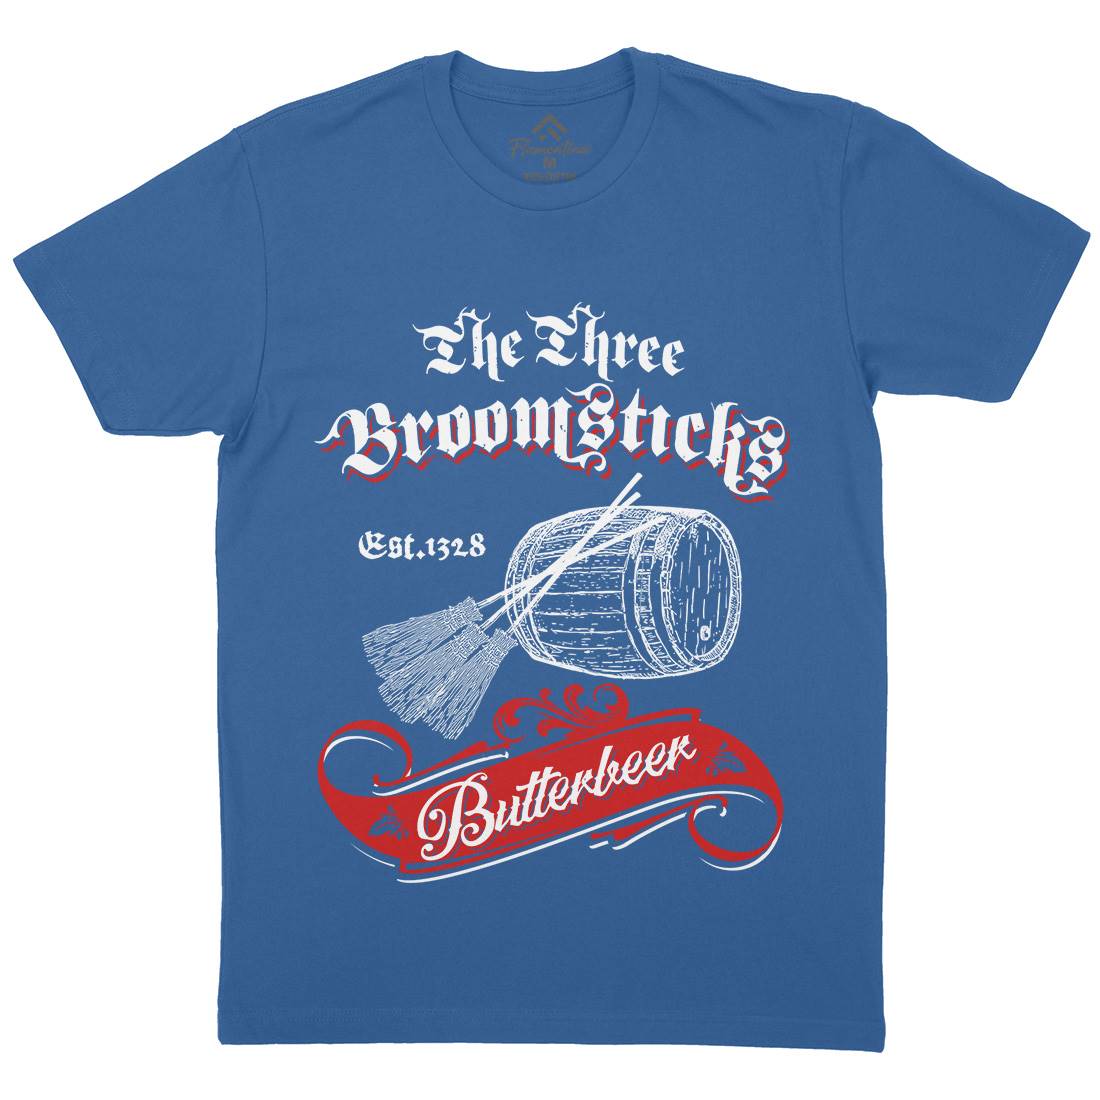 Three Broomsticks Mens Organic Crew Neck T-Shirt Drinks D327